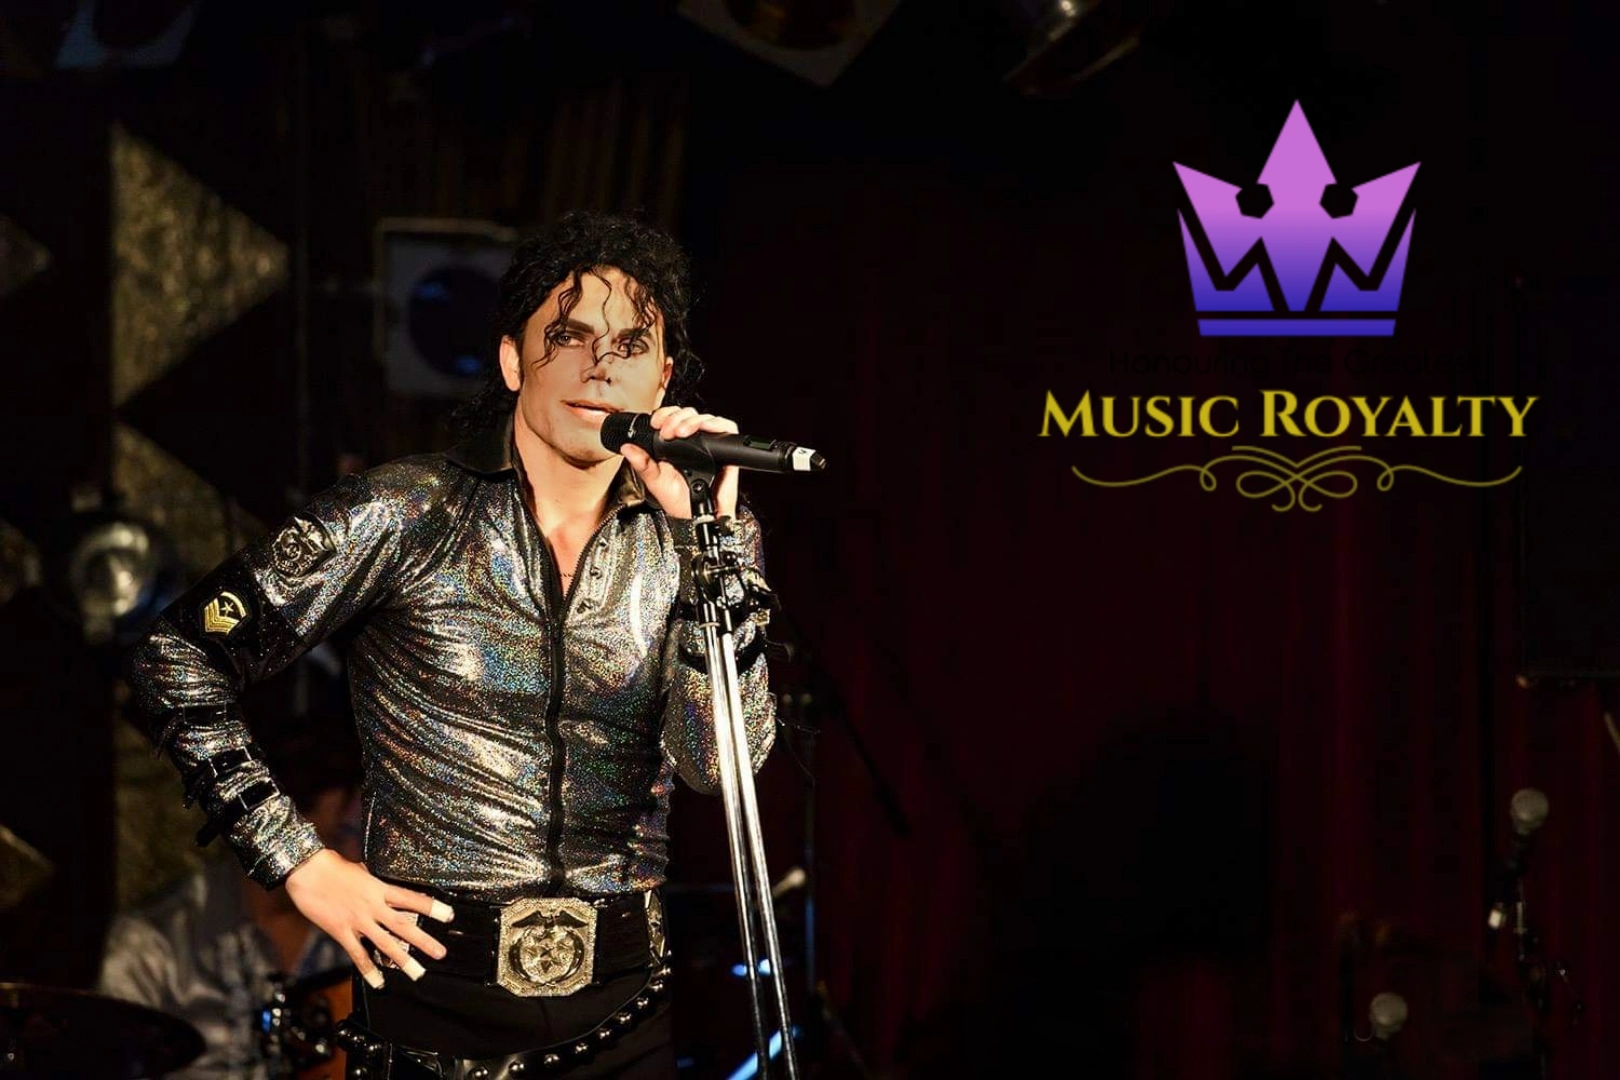 Music Royalty star J Michael Lucas as Michael Jackson 